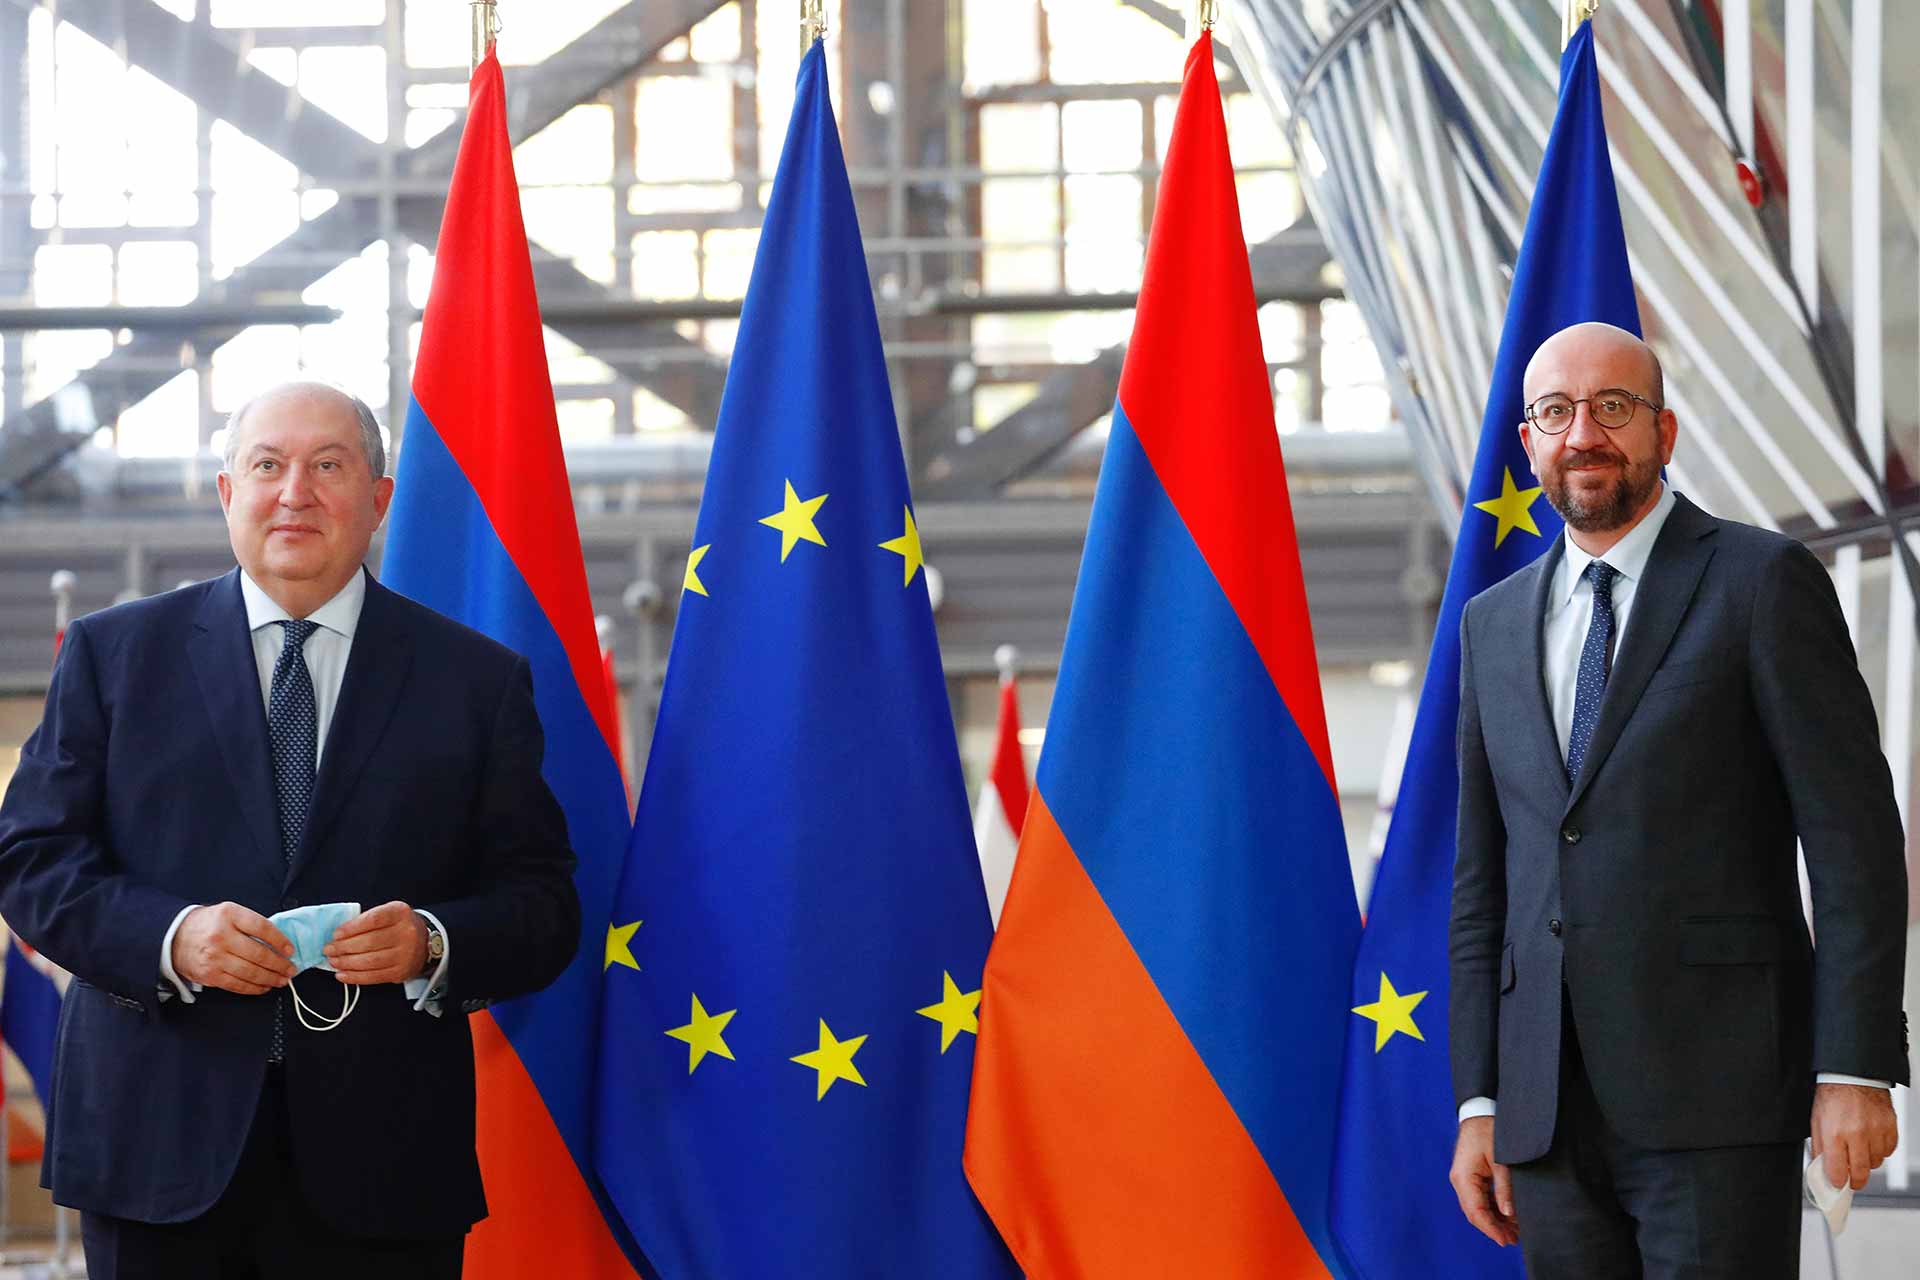 Dr Armen SARKISSIAN, President of Armenia; Mr Charles MICHEL, President of the European Council